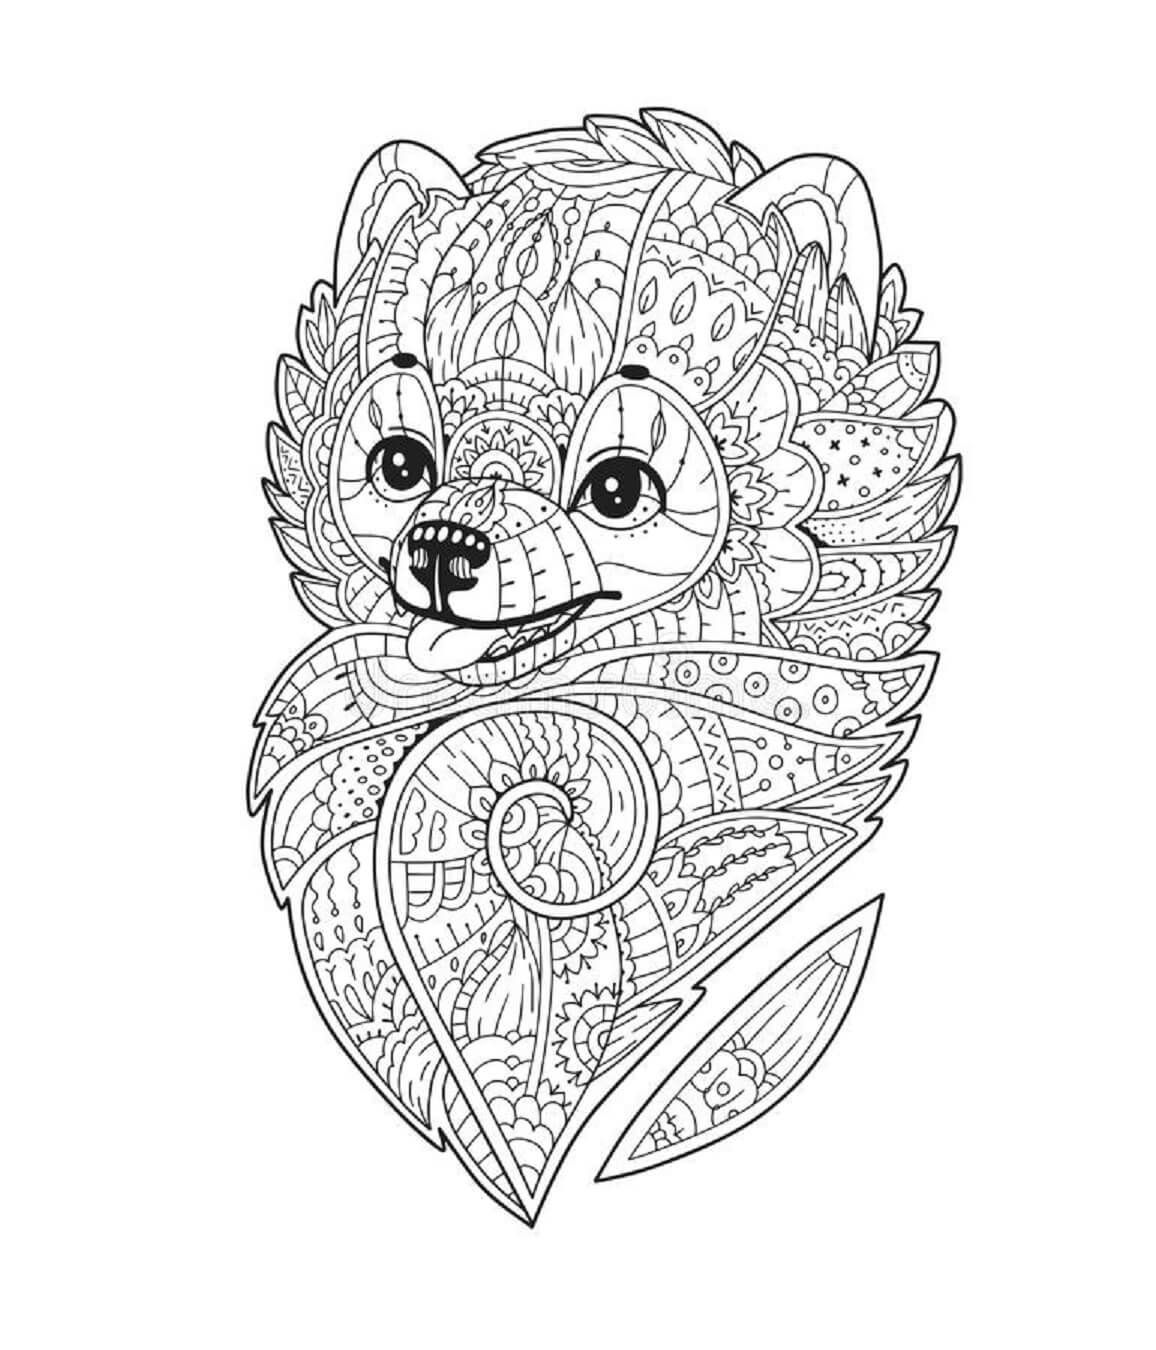 Mandala Dog Coloring Page – Sheet 13 Mandala